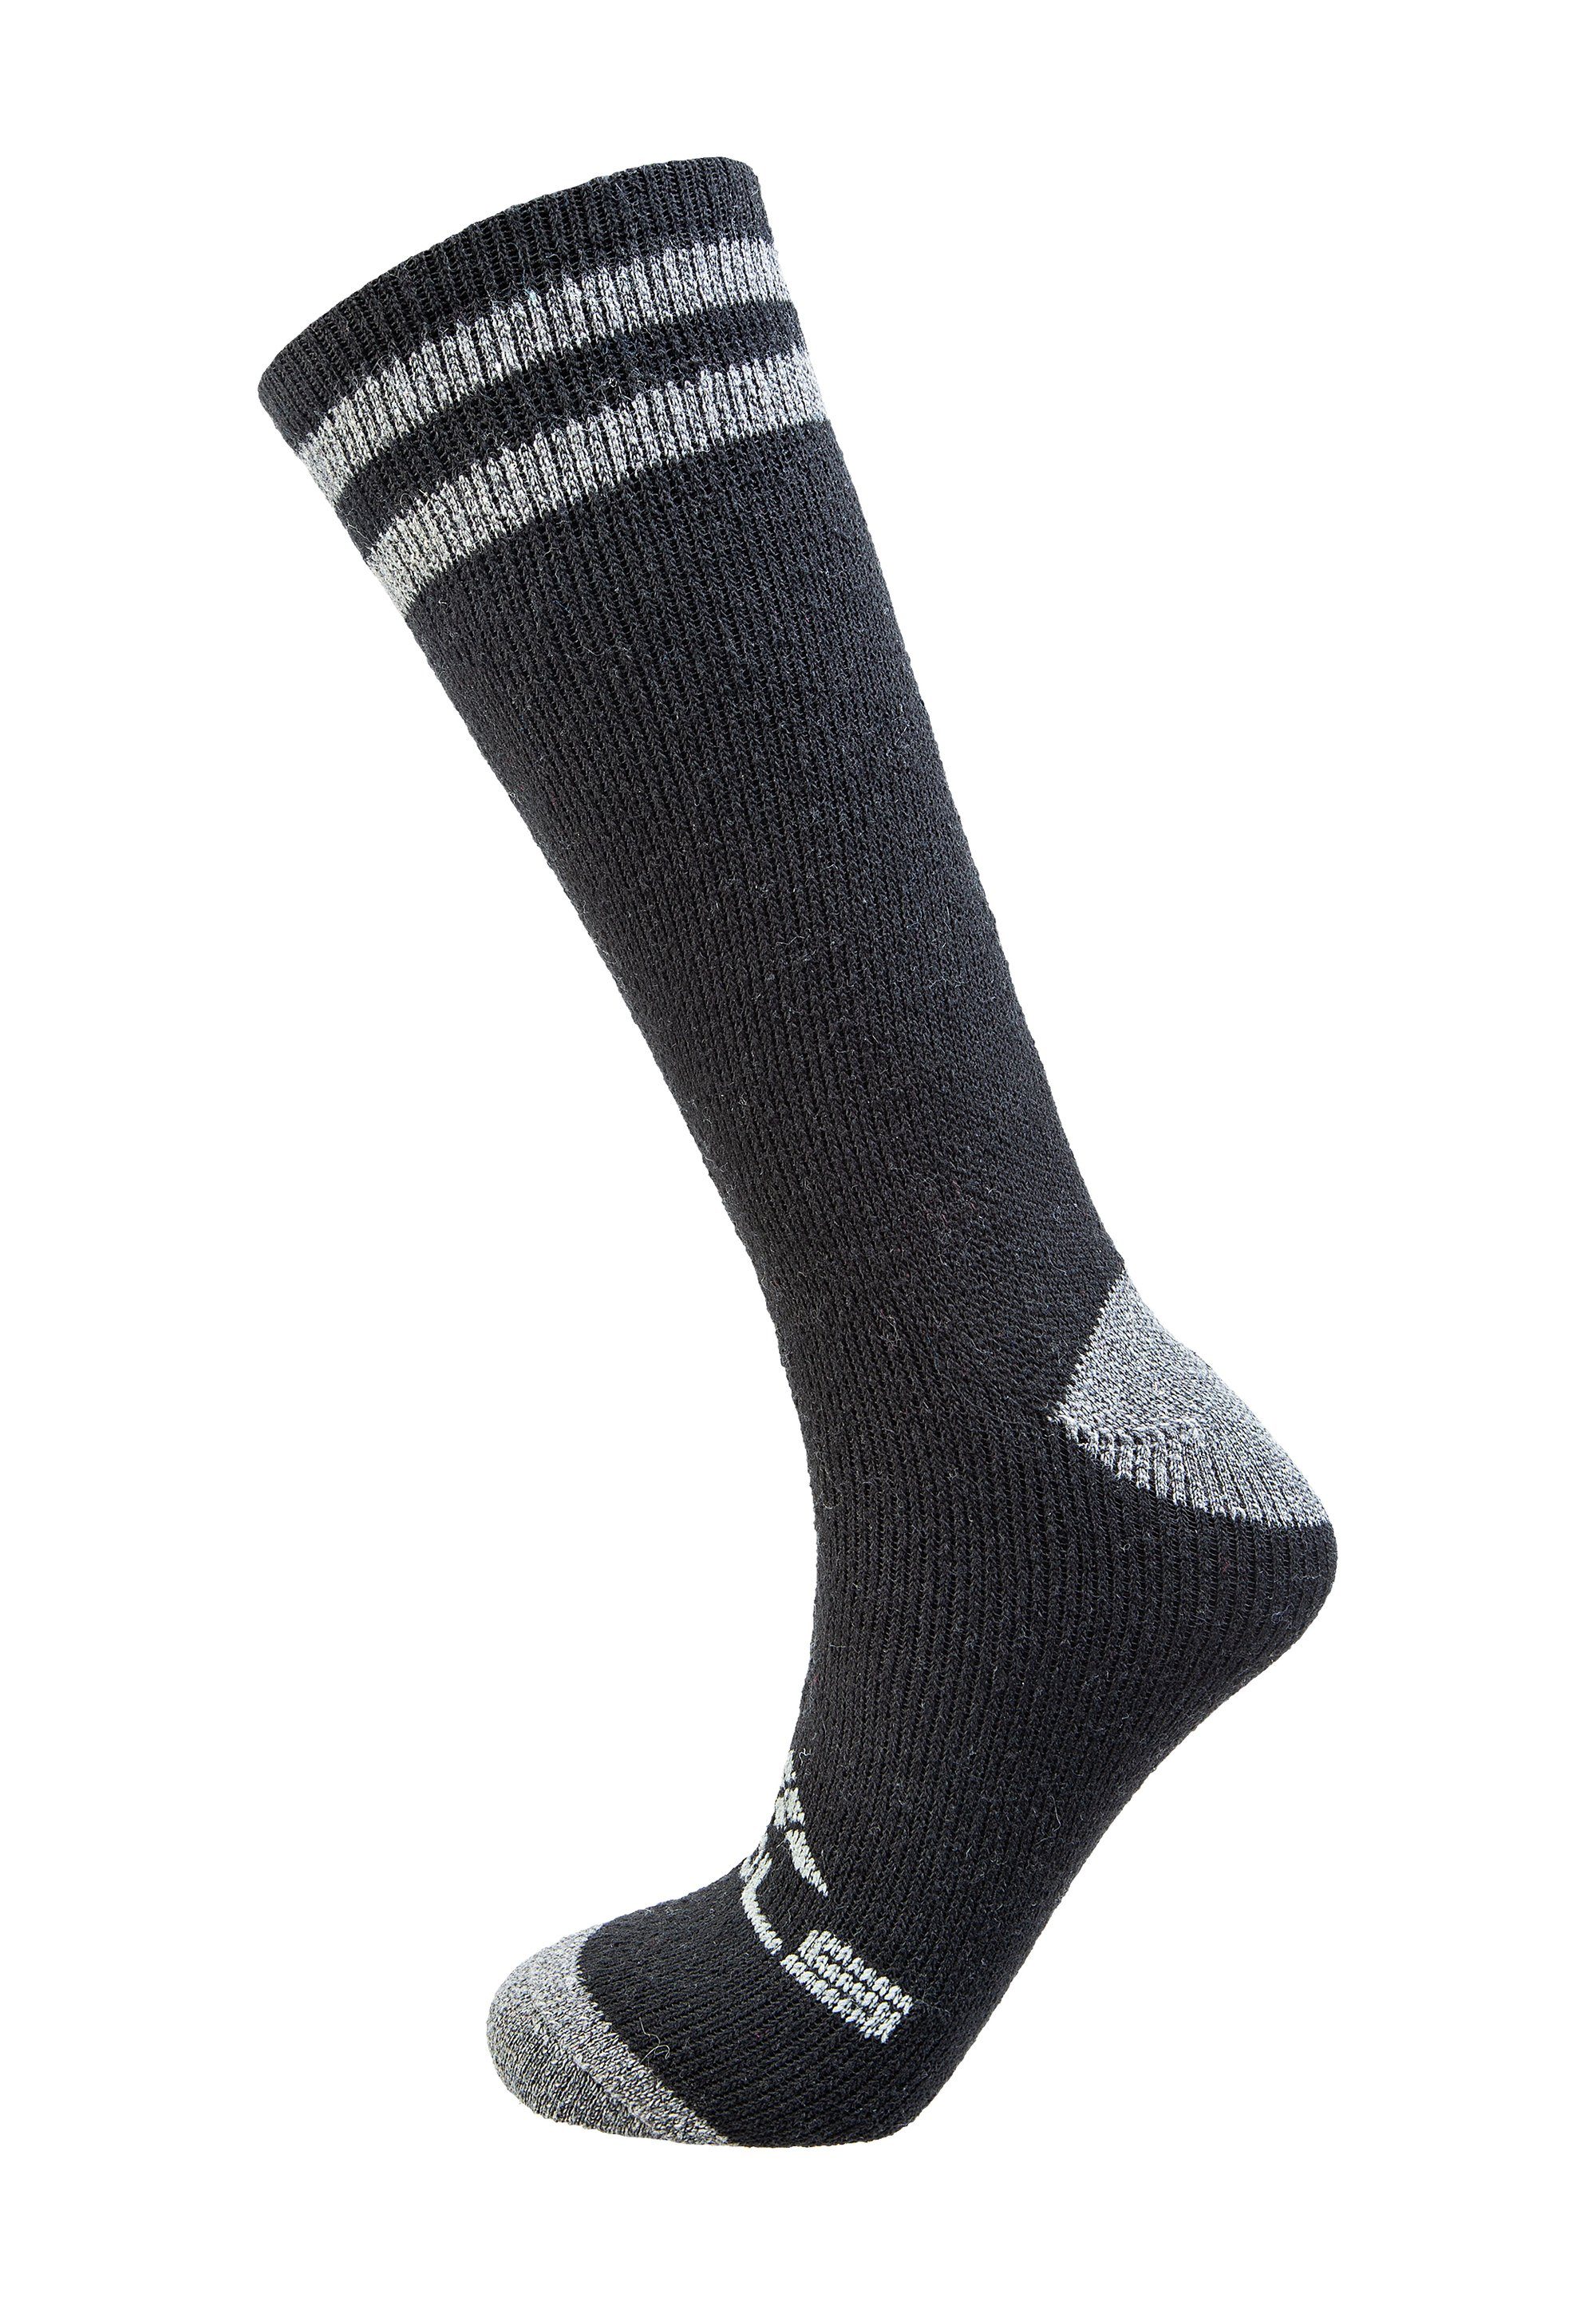 MOLS Bonner (1-Paar) Material aus schwarz-grau Socken wärmendem